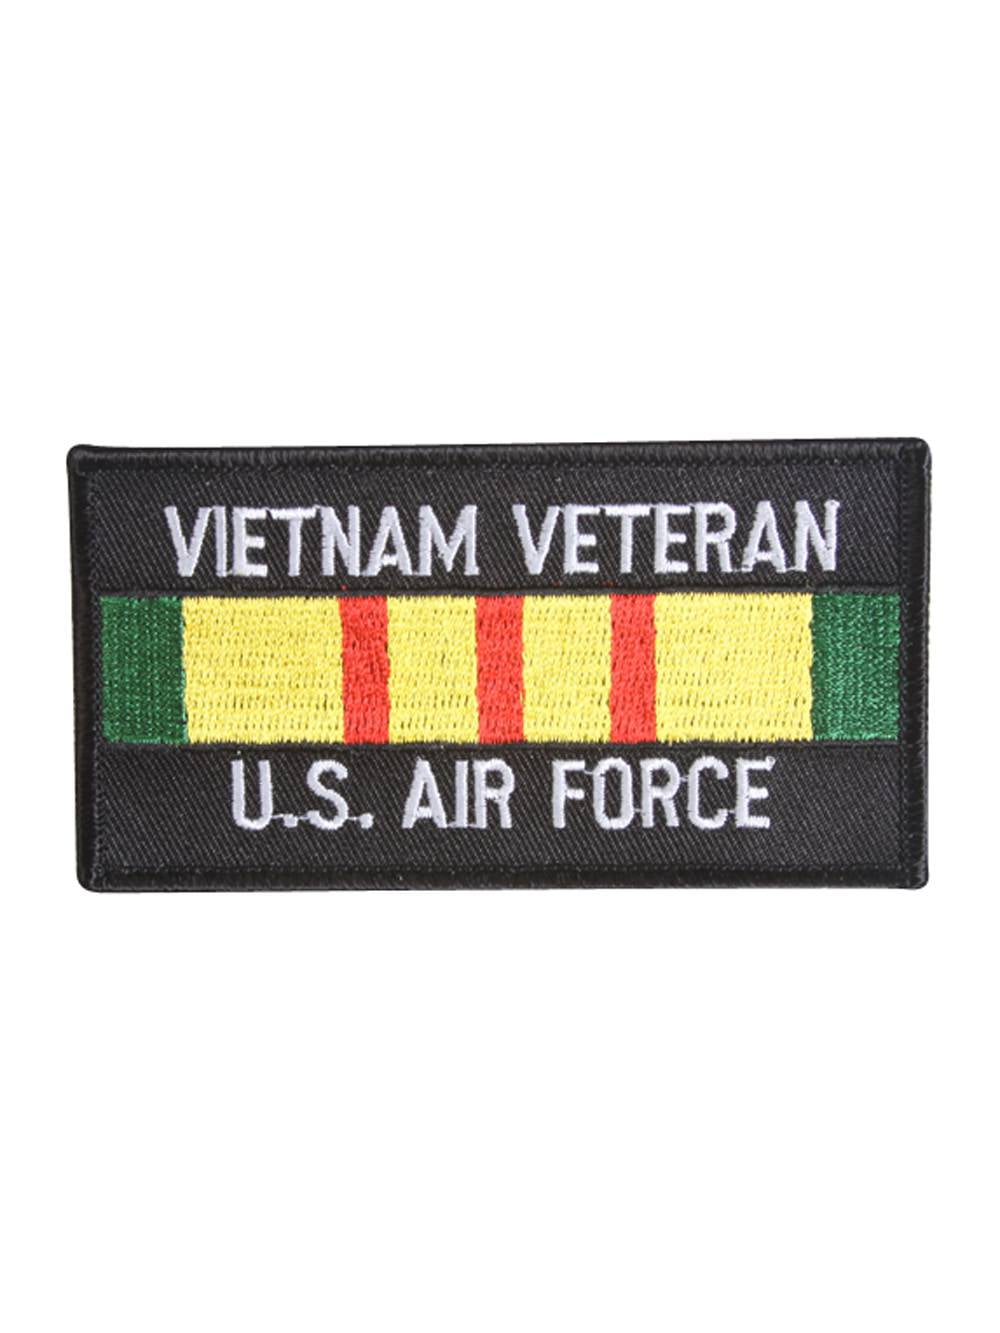 United States Air Force Vietnam Veteran Patch